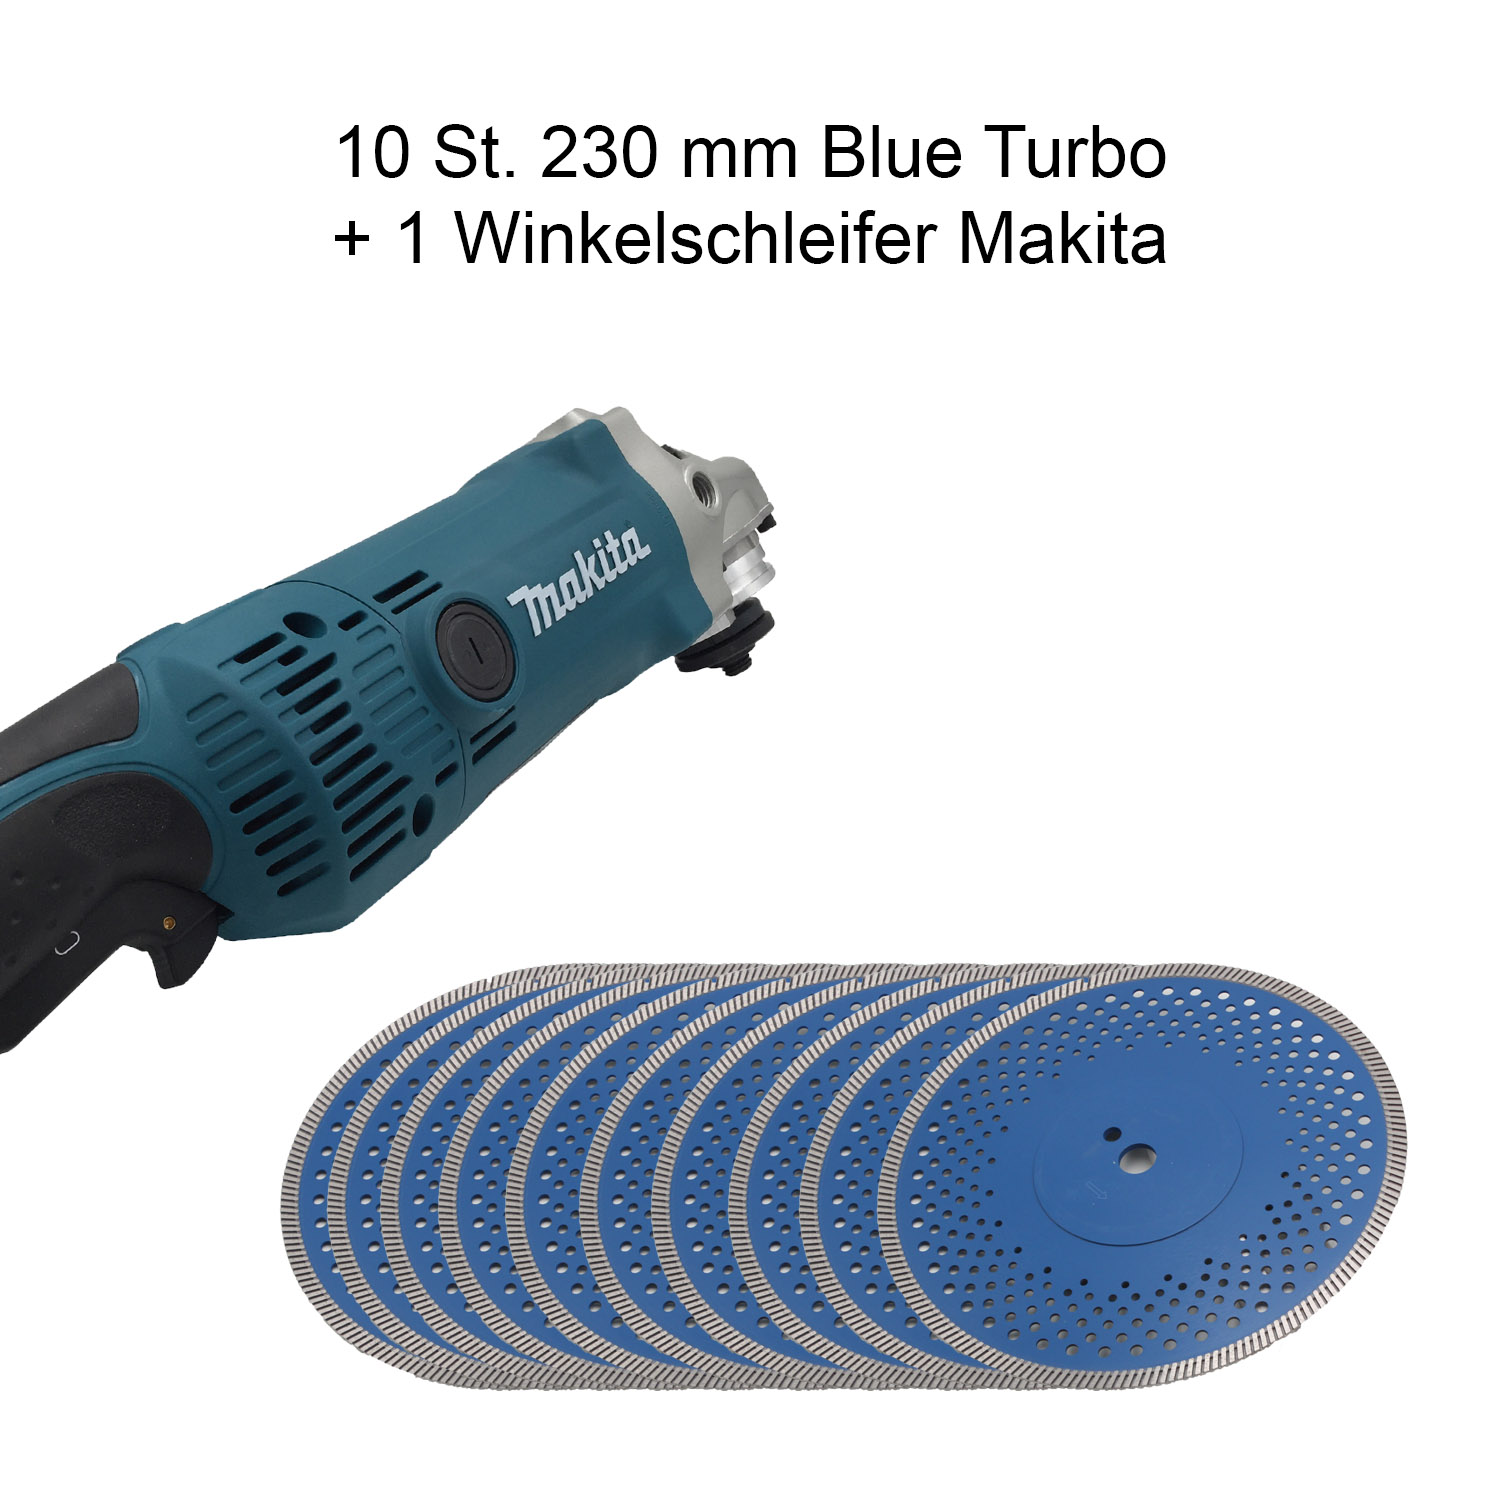 Set Makita Winkelschleifer GA9050R + 10 Stück Diamanttrennscheibe blue Turbi 230 mm